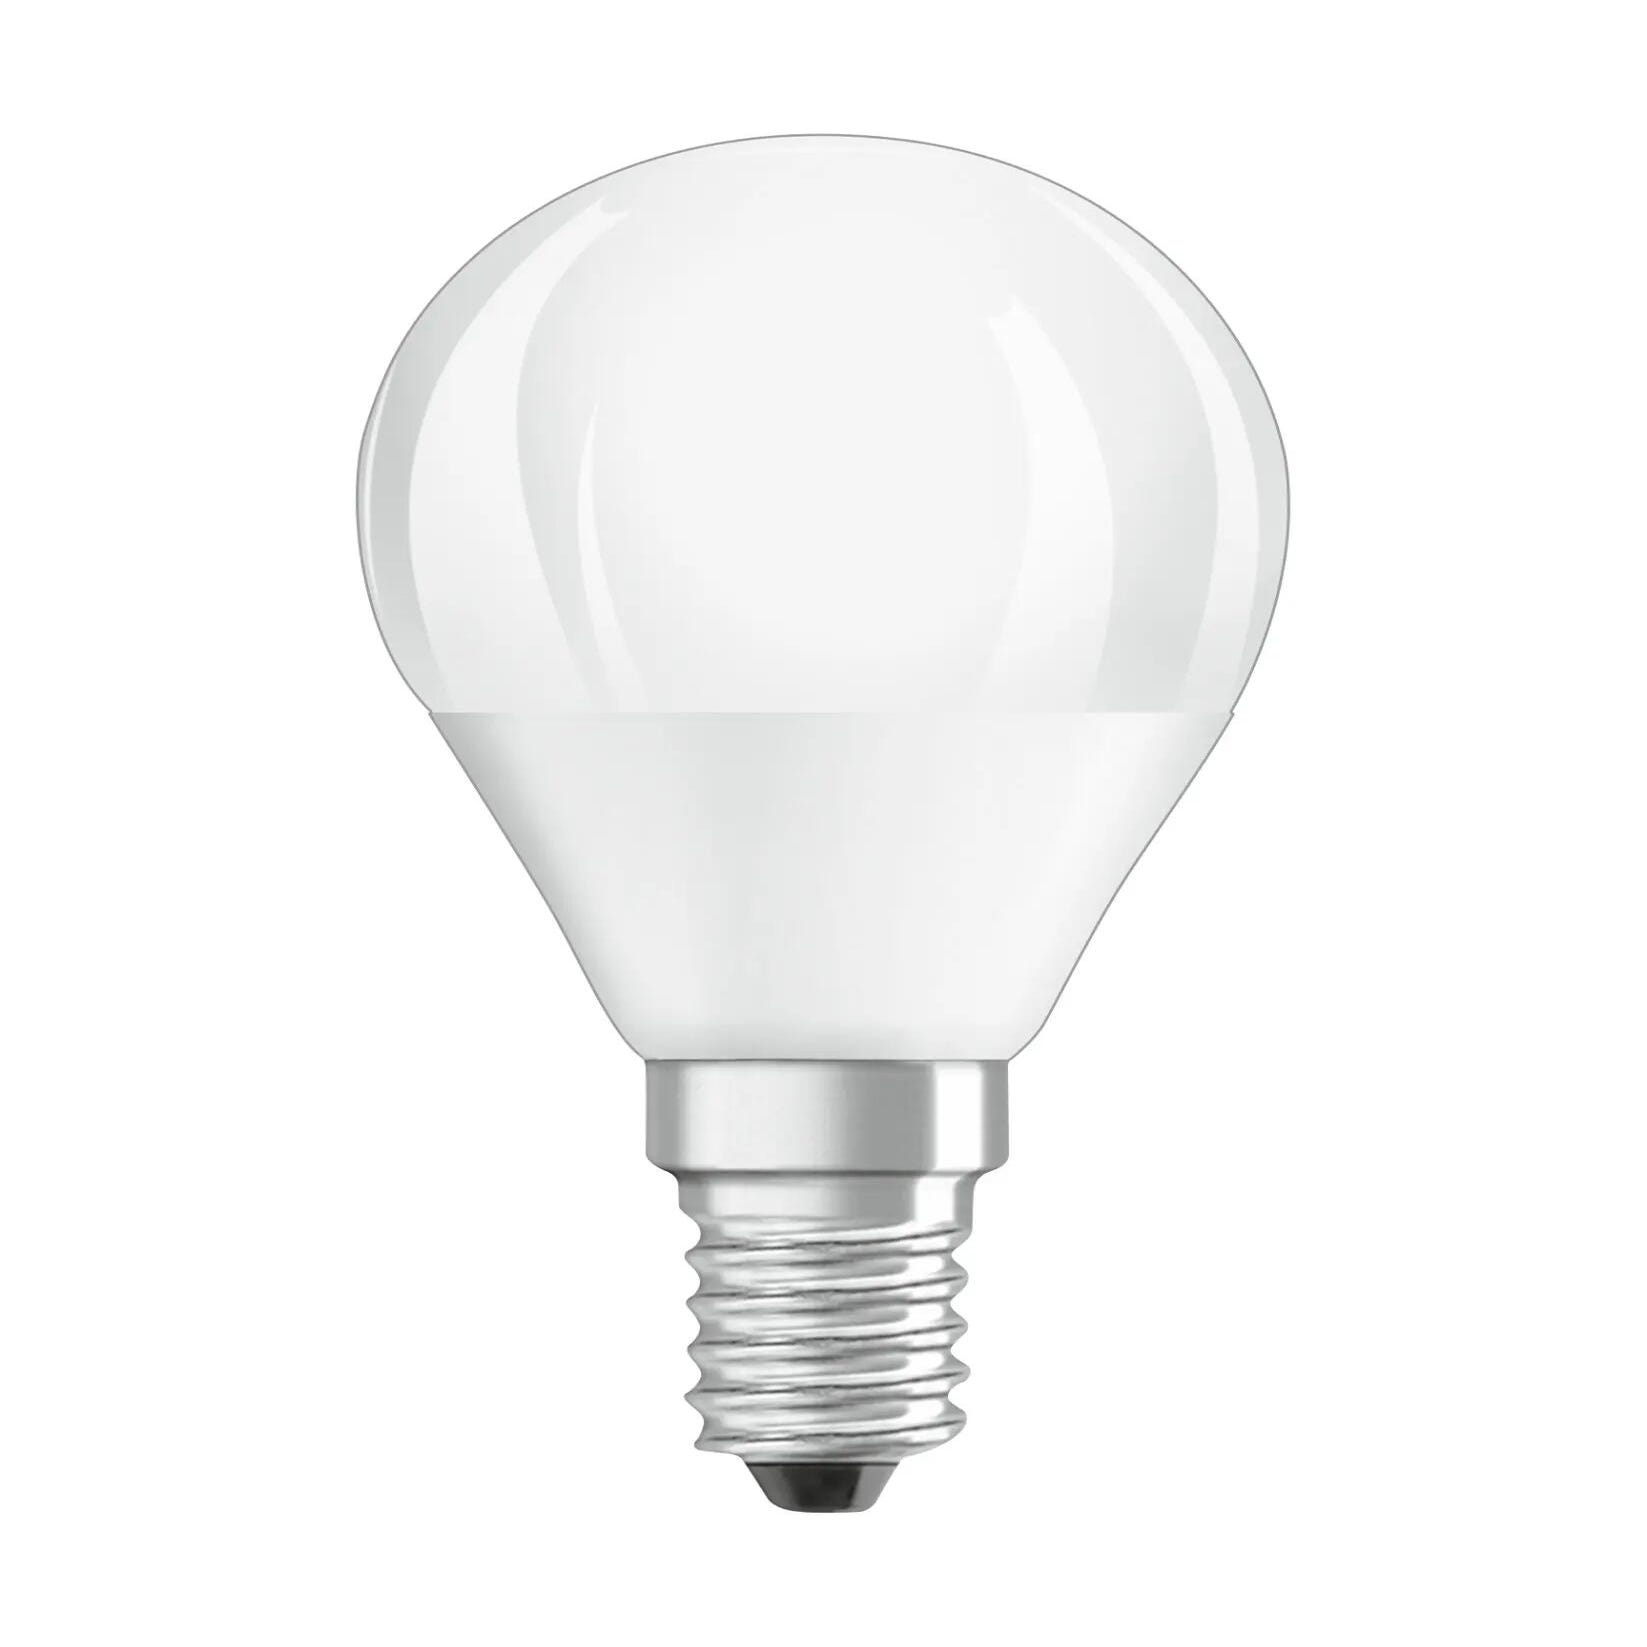 Ampoule led E14, 250Lm = 25W, blanc chaud, OSRAM